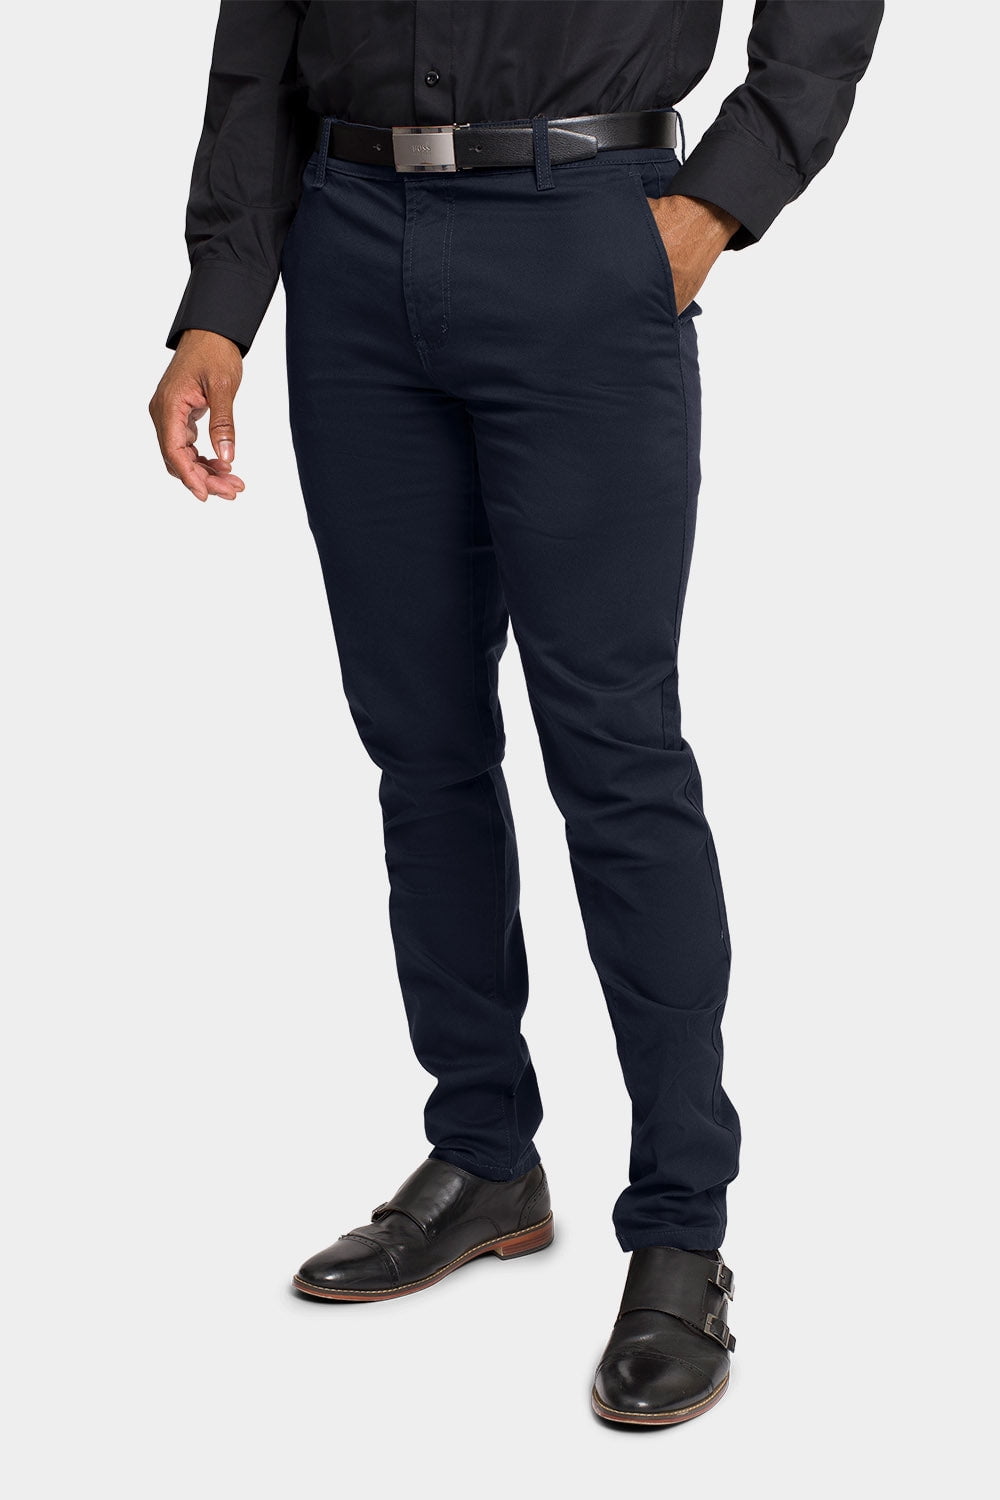 Boltini Italy Men's Flat Front Slim Fit Slacks Trousers Dress Pants (Navy,  34x30) 